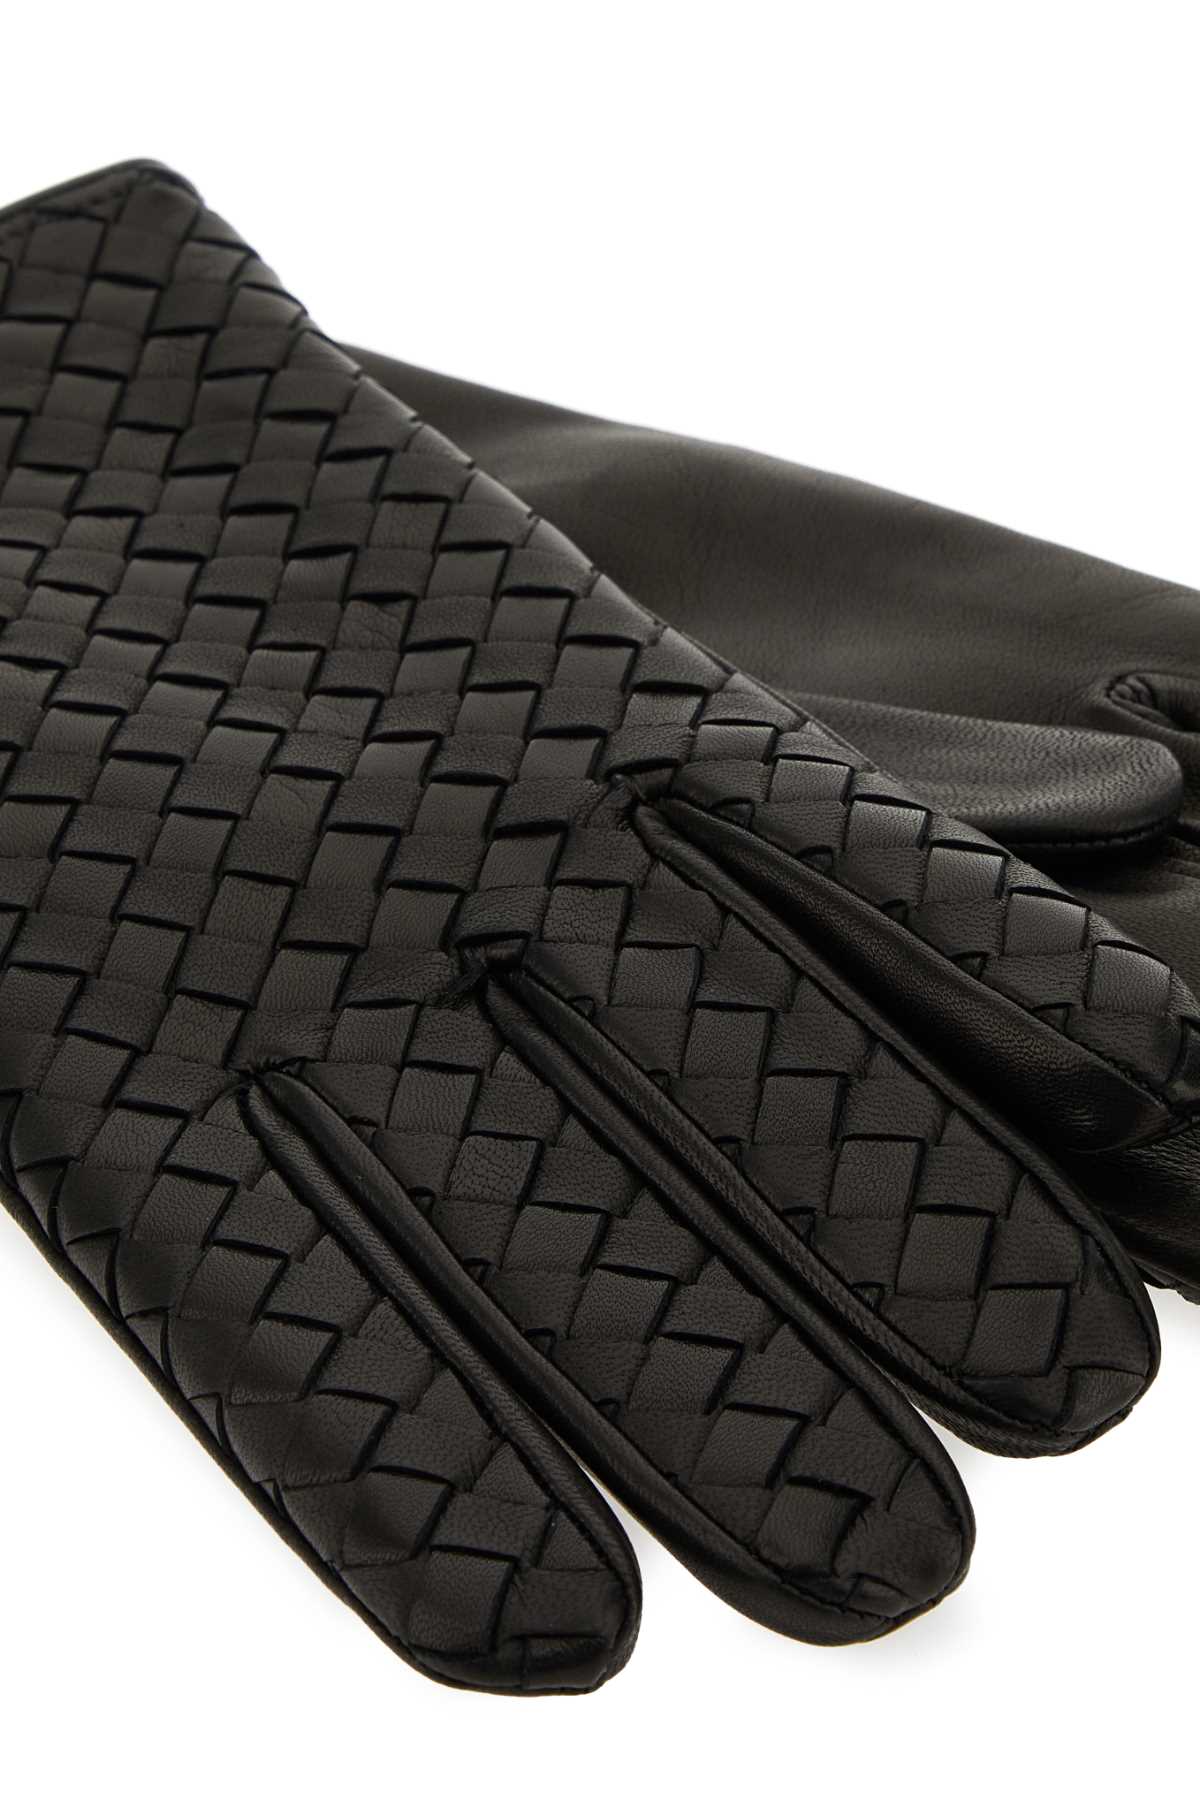 Shop Bottega Veneta Black Nappa Leather Gloves